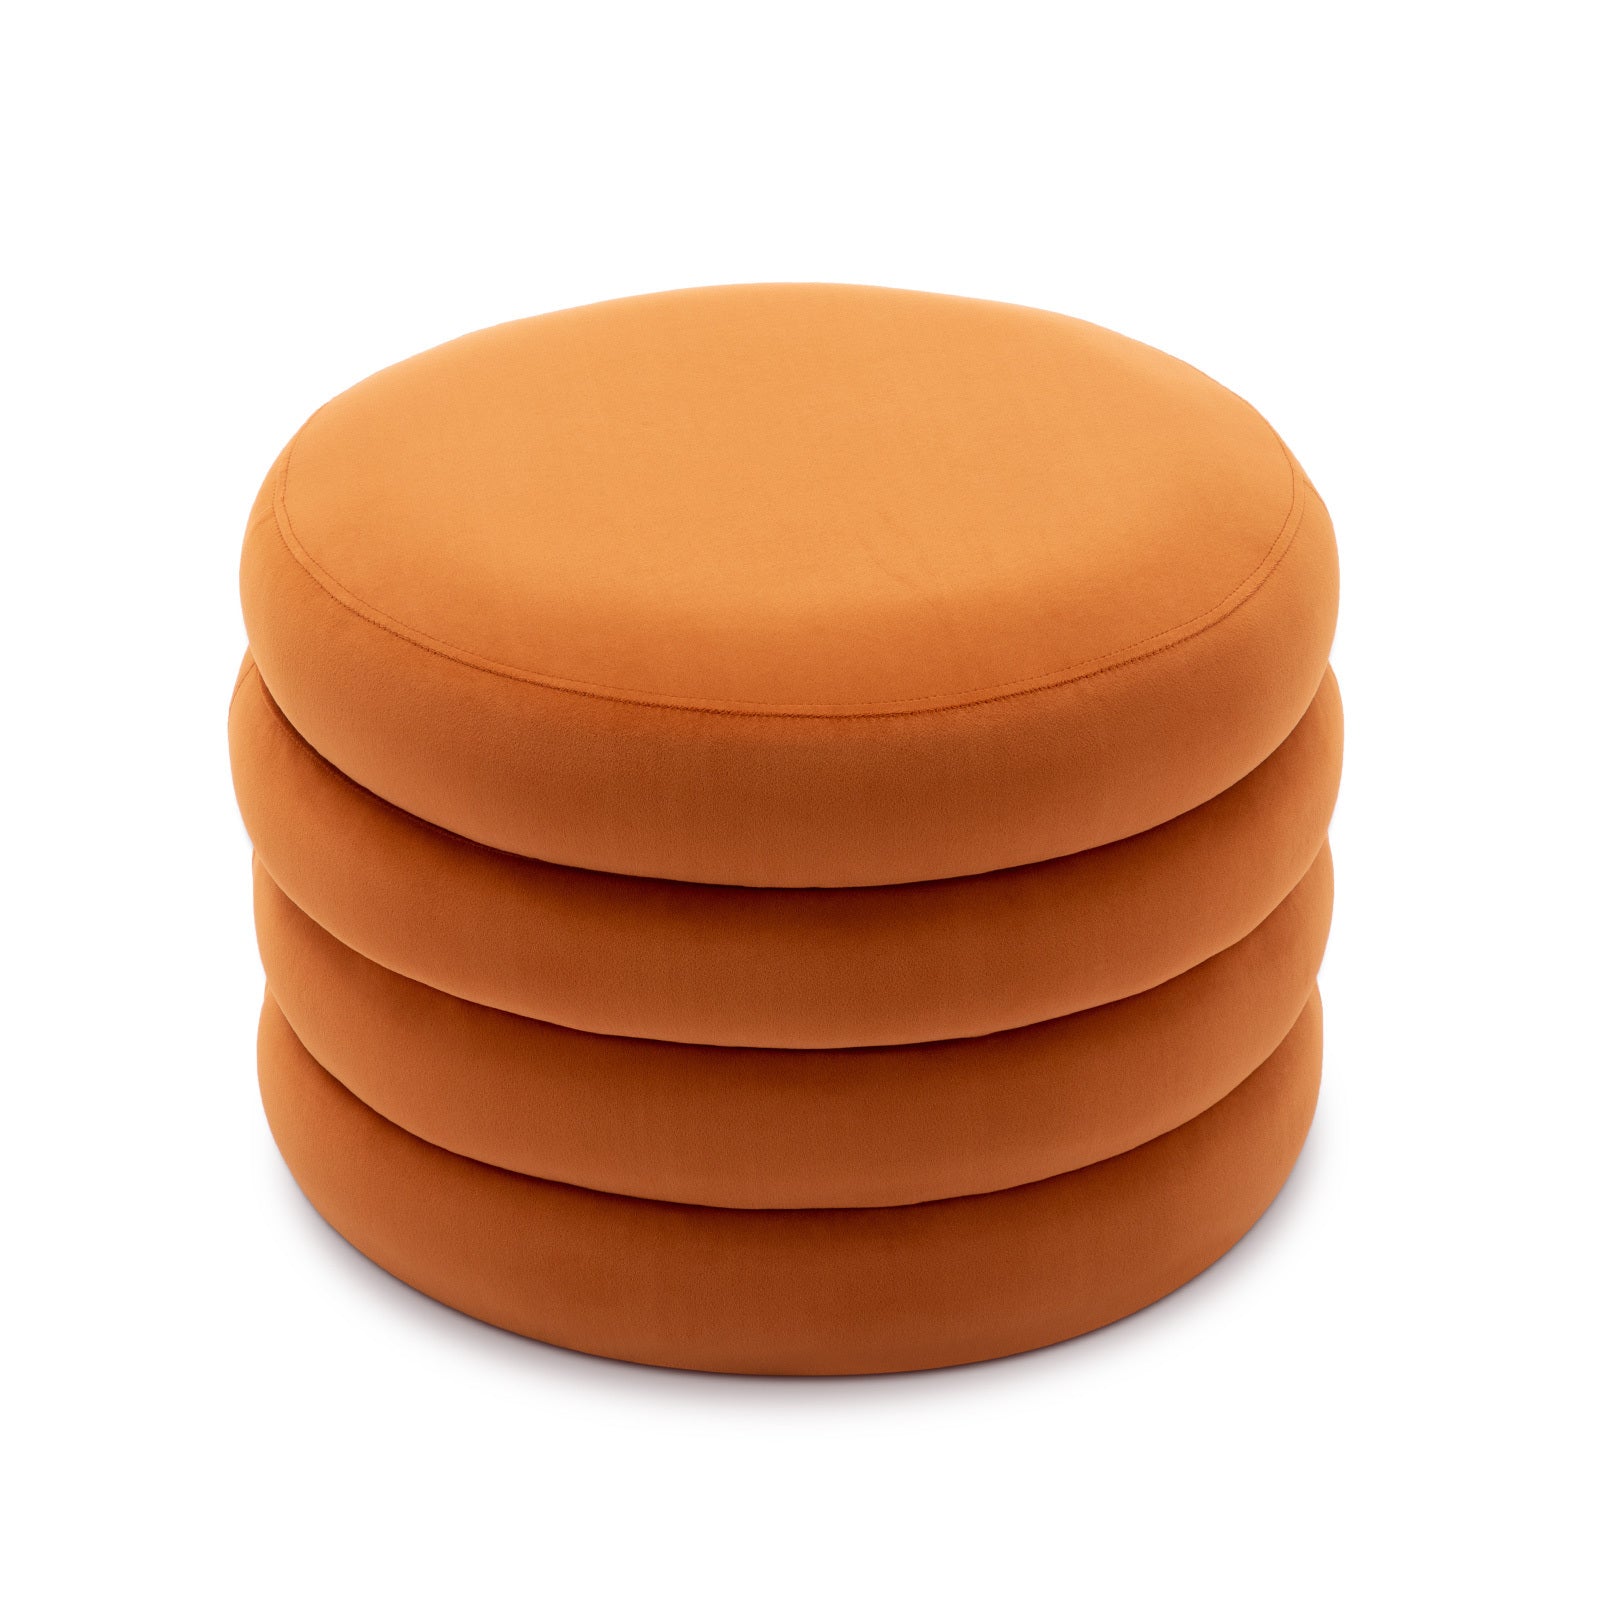 007-Velvet Fabric Storage Round Ottoman Footstool With Wooden Shelving,Orange